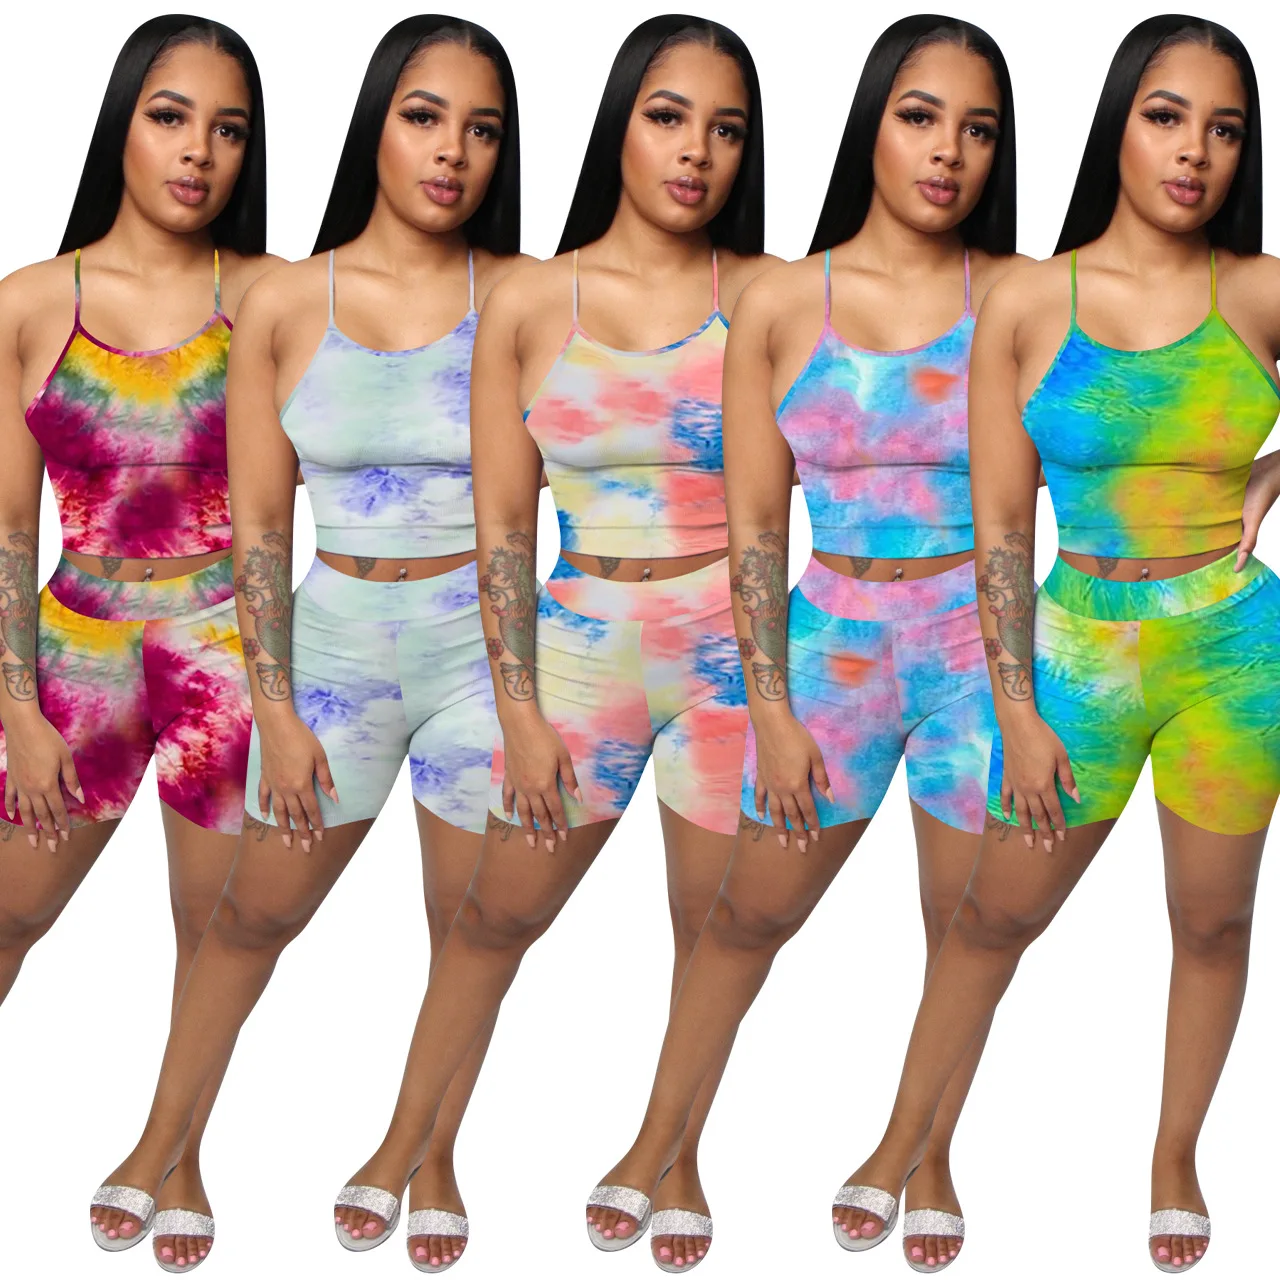 

Hot Sale Women Camisole Crop Tops Shorts Jogging Suit Summer Tie Dye Sportswear Yoga Two Piece Short Set, Pictures showed